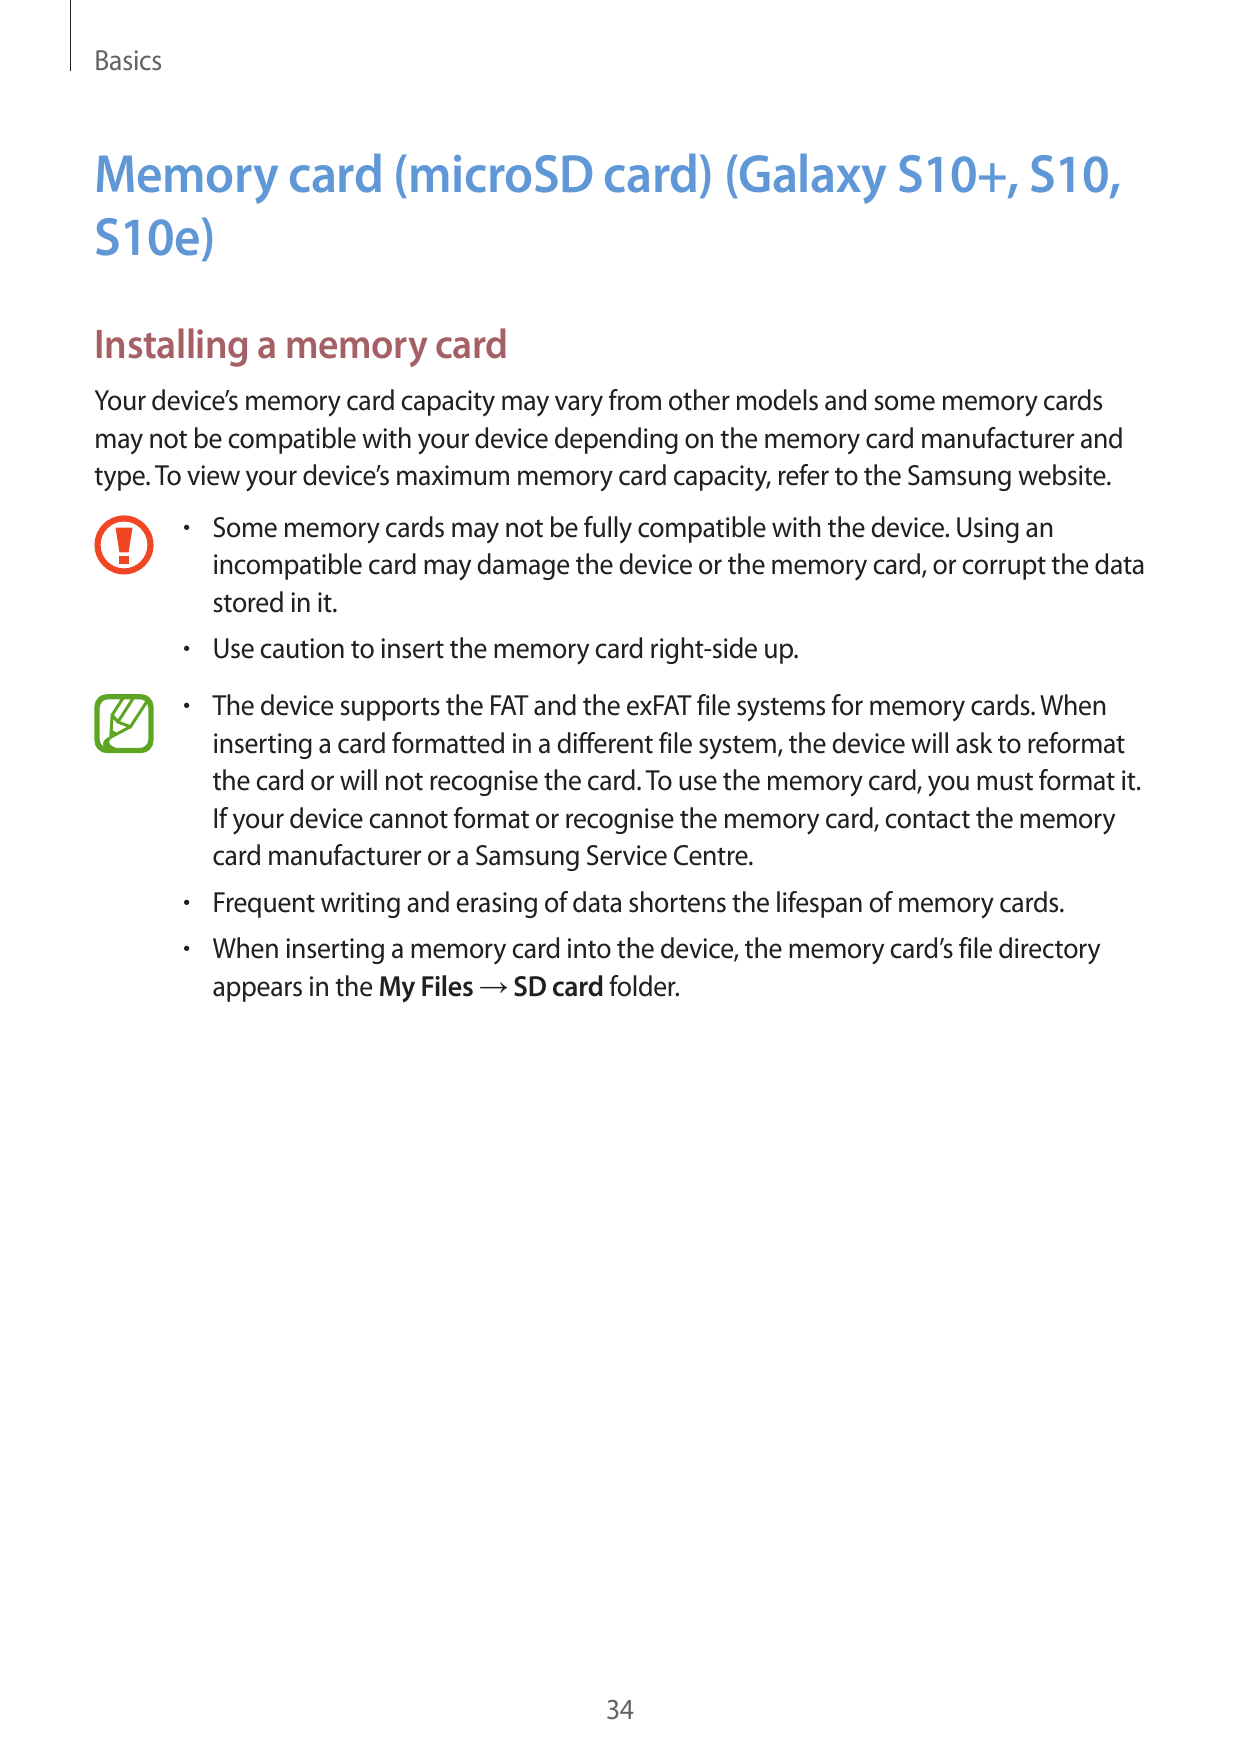 BasicsMemory card (microSD card) (Galaxy S10+, S10,S10e)Installing a memory cardYour device’s memory card capacity may vary from